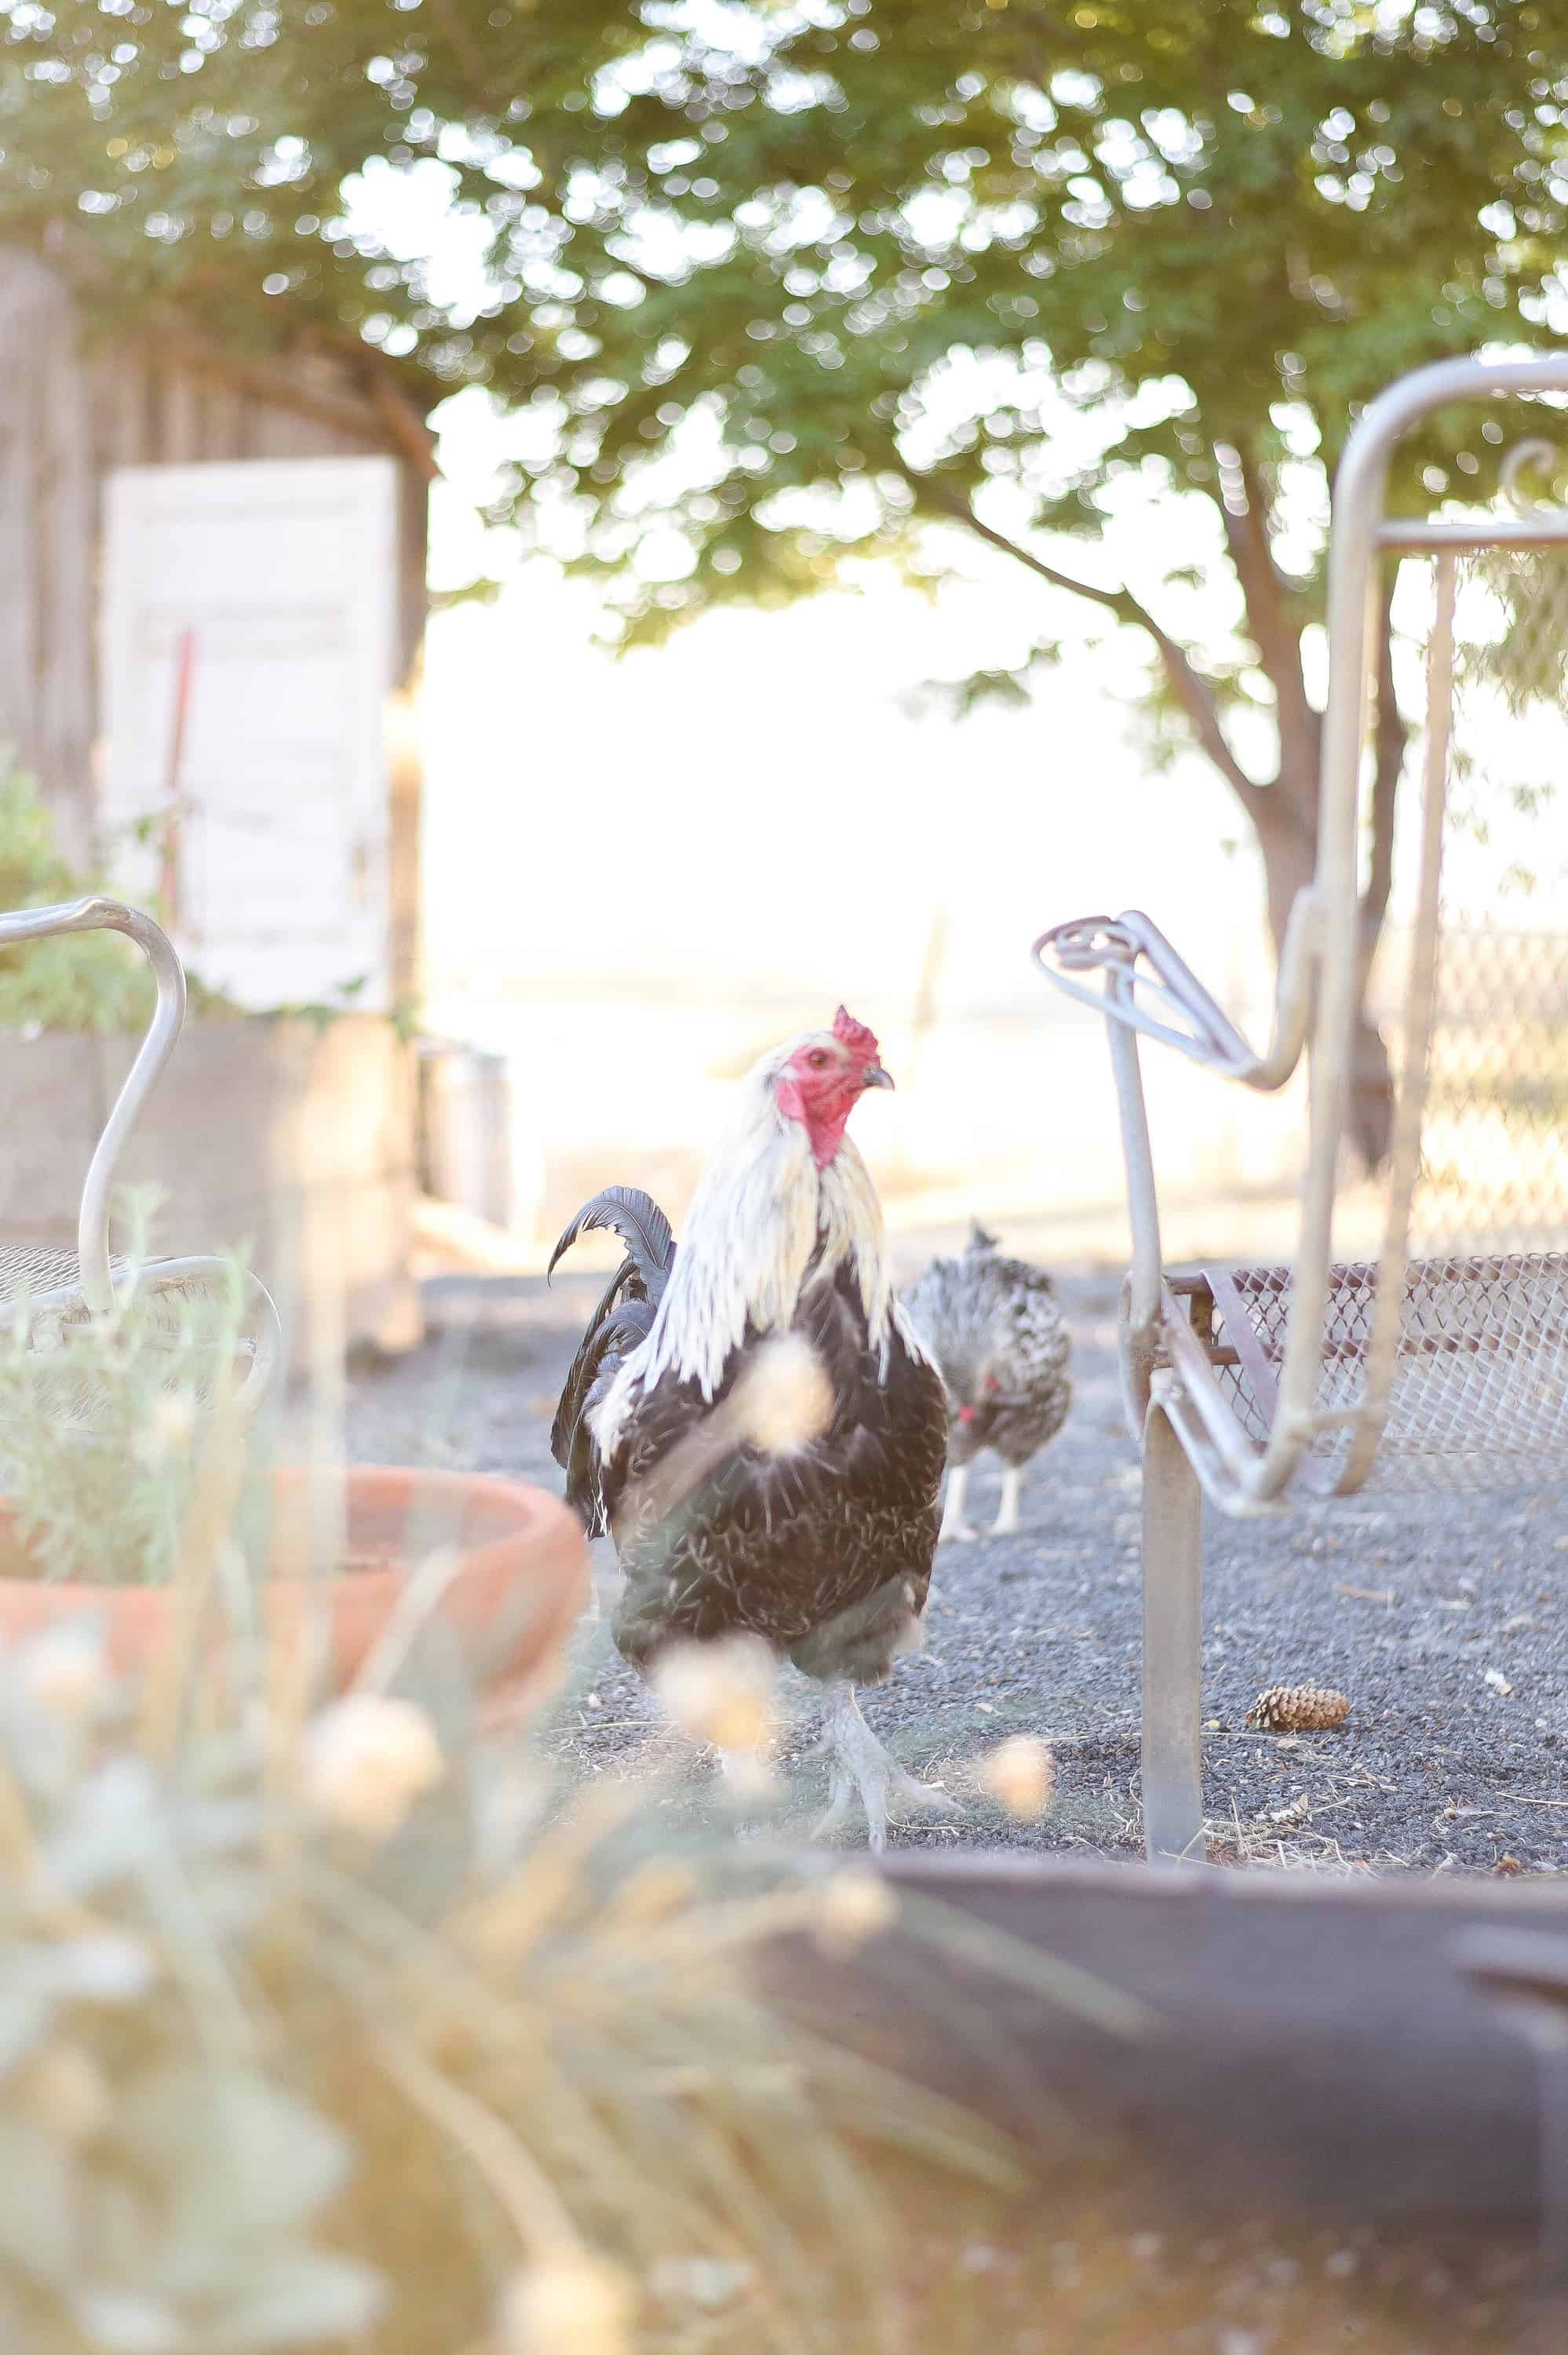 rooster walking through a garden